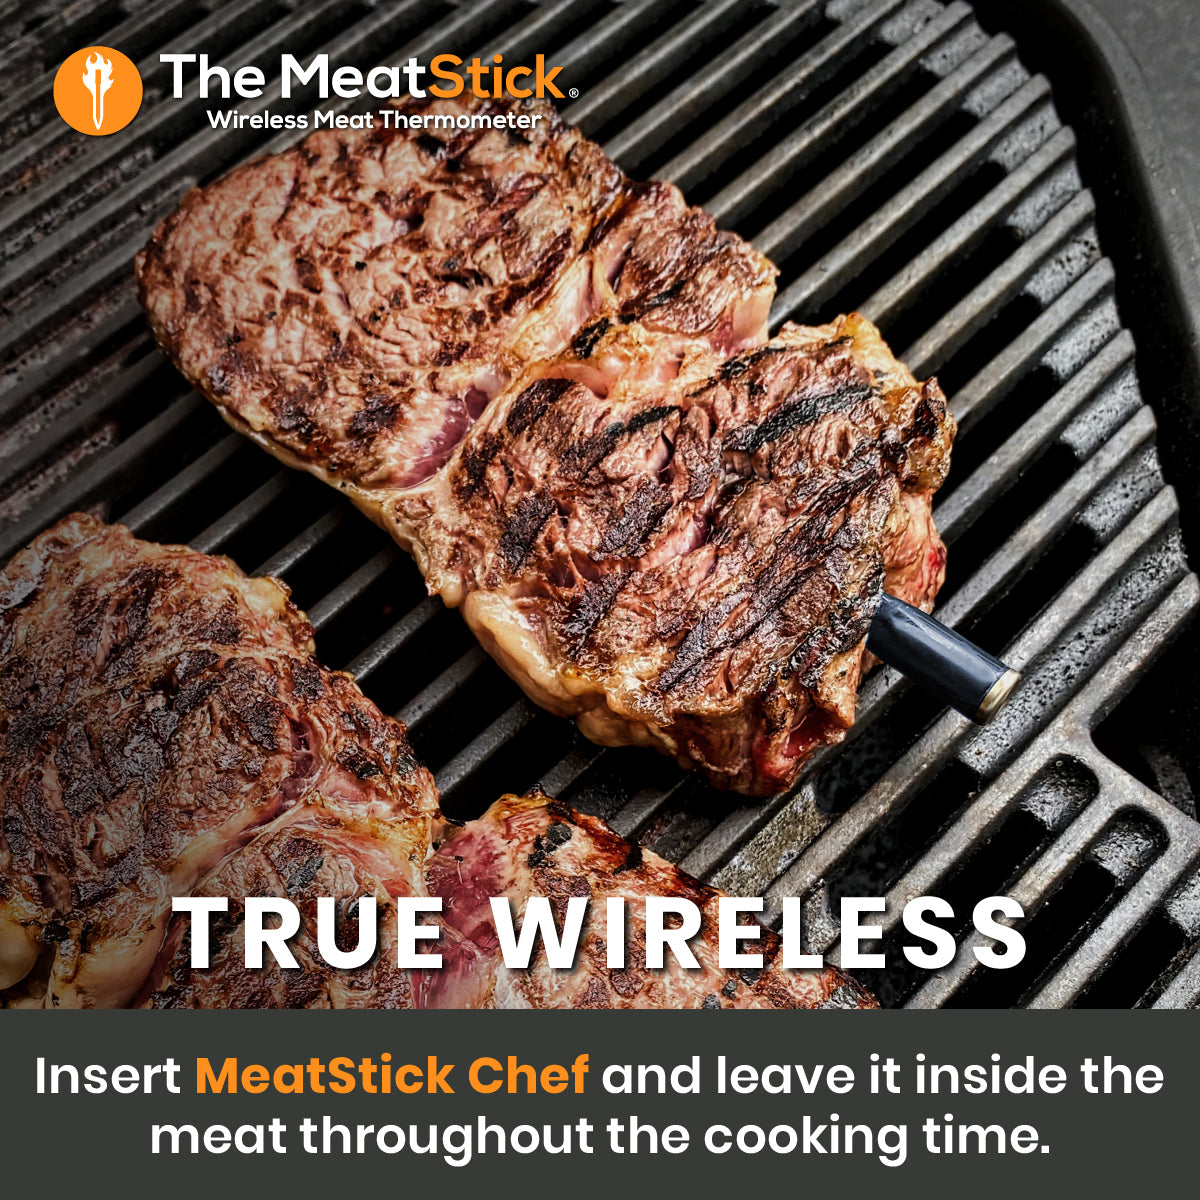 MeatStick X Set, 260 Ft Range Wireless Meat Thermometer